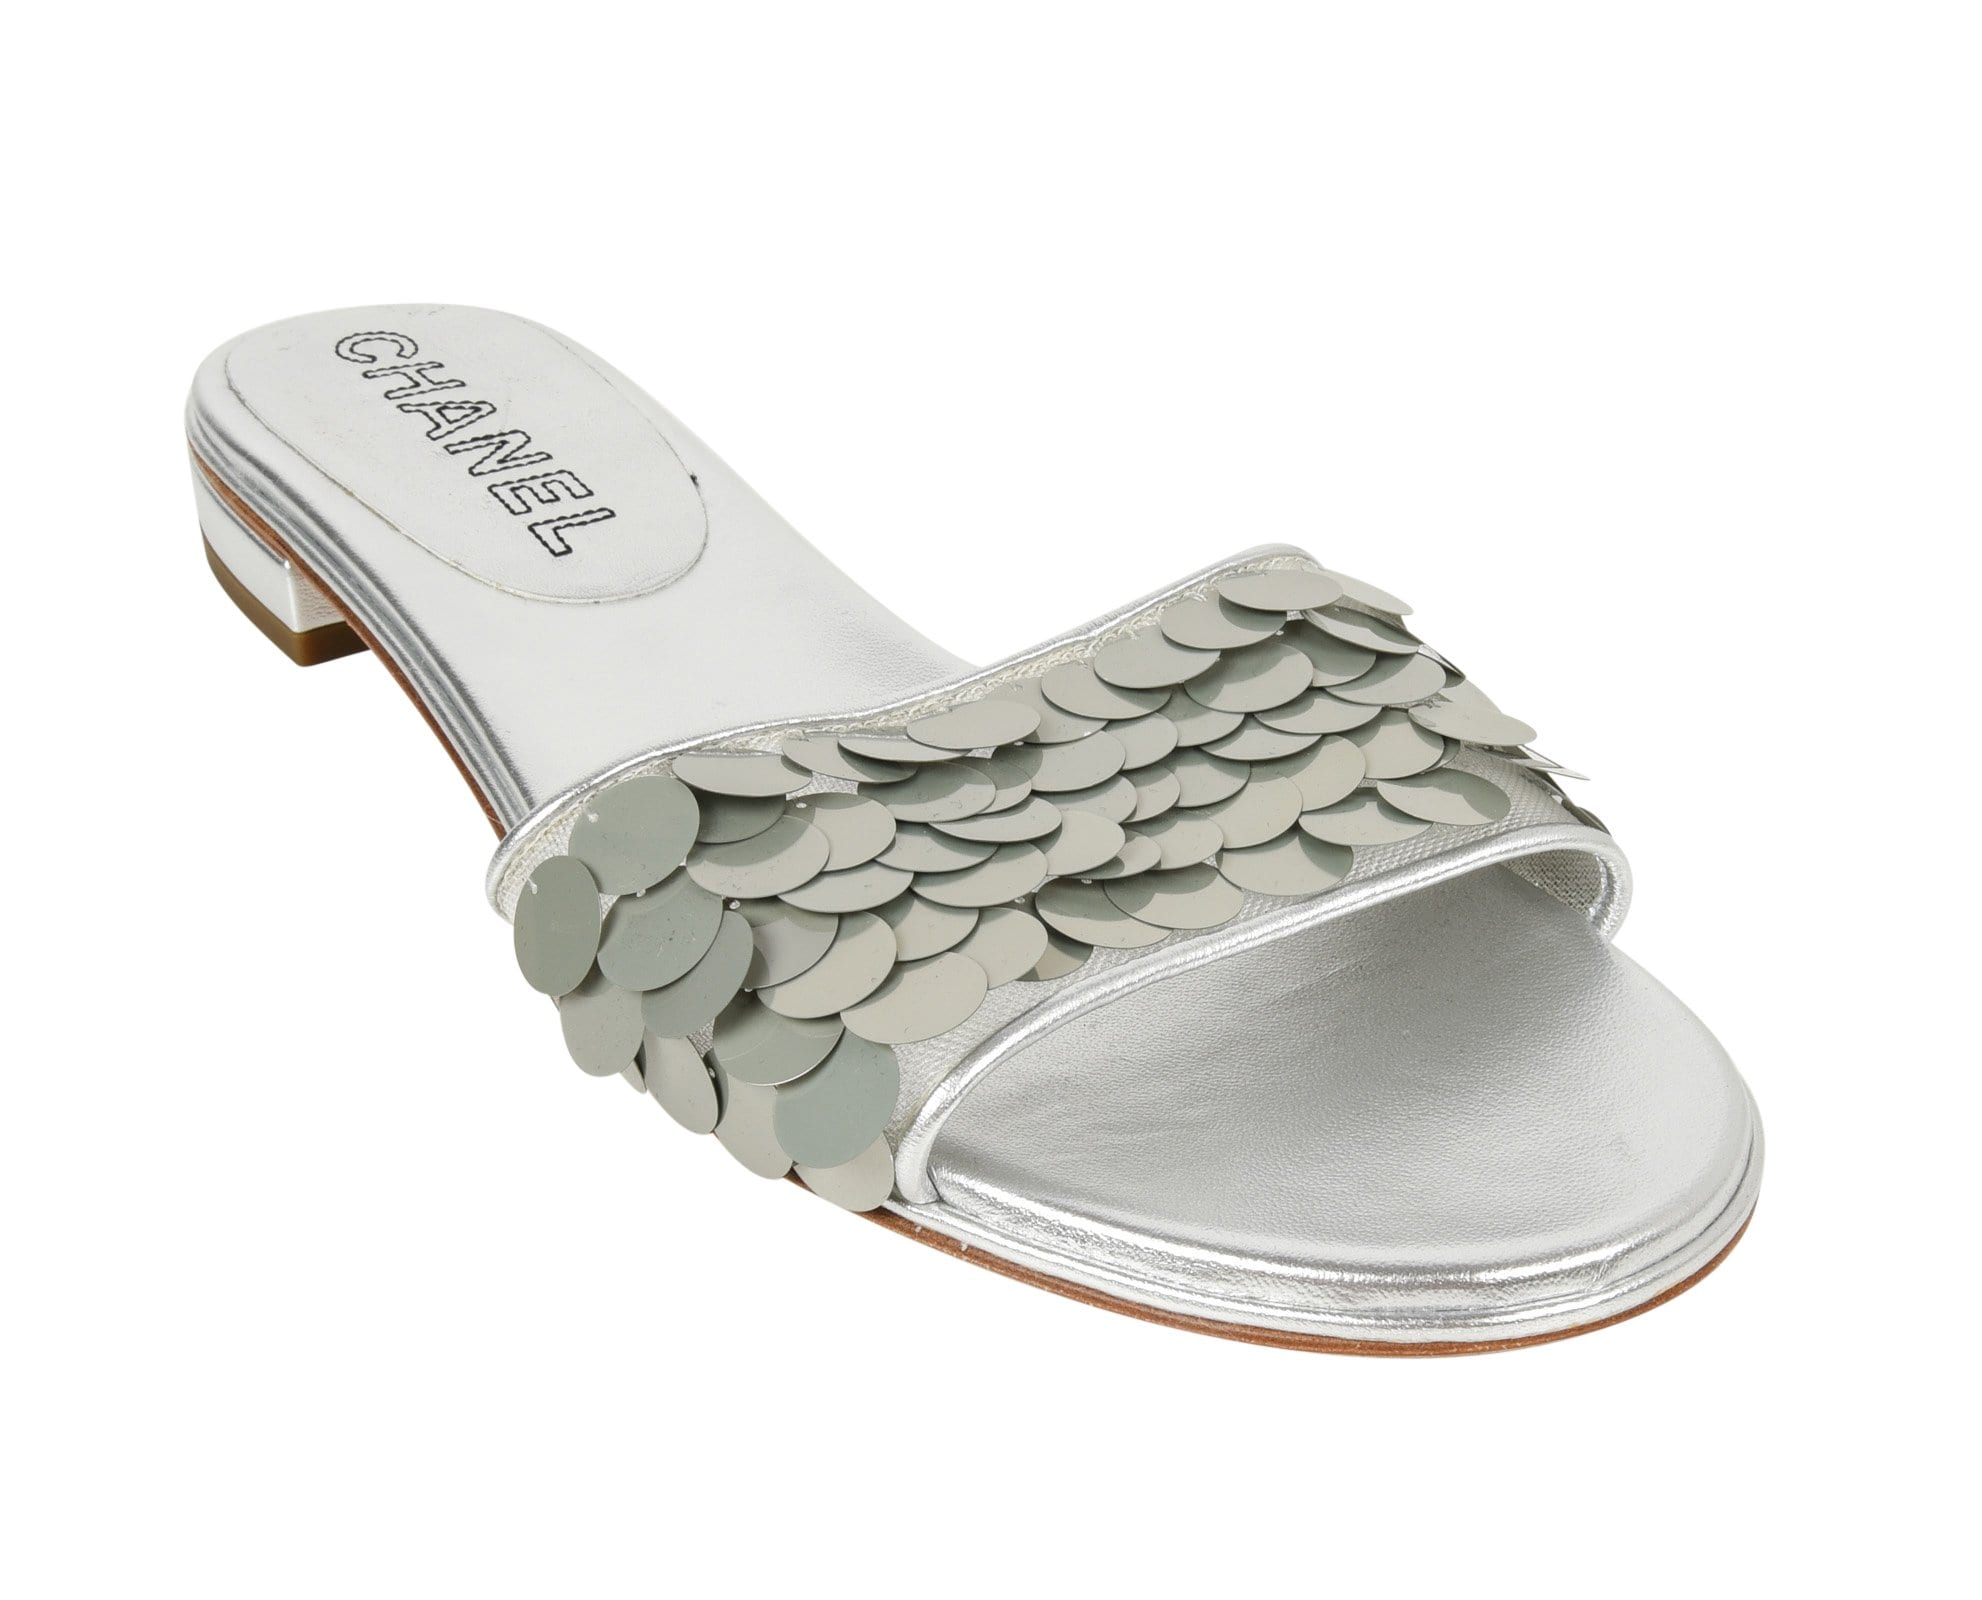 Chanel Shoe Silver Slide Light Catching Paillette Sequins 39.5